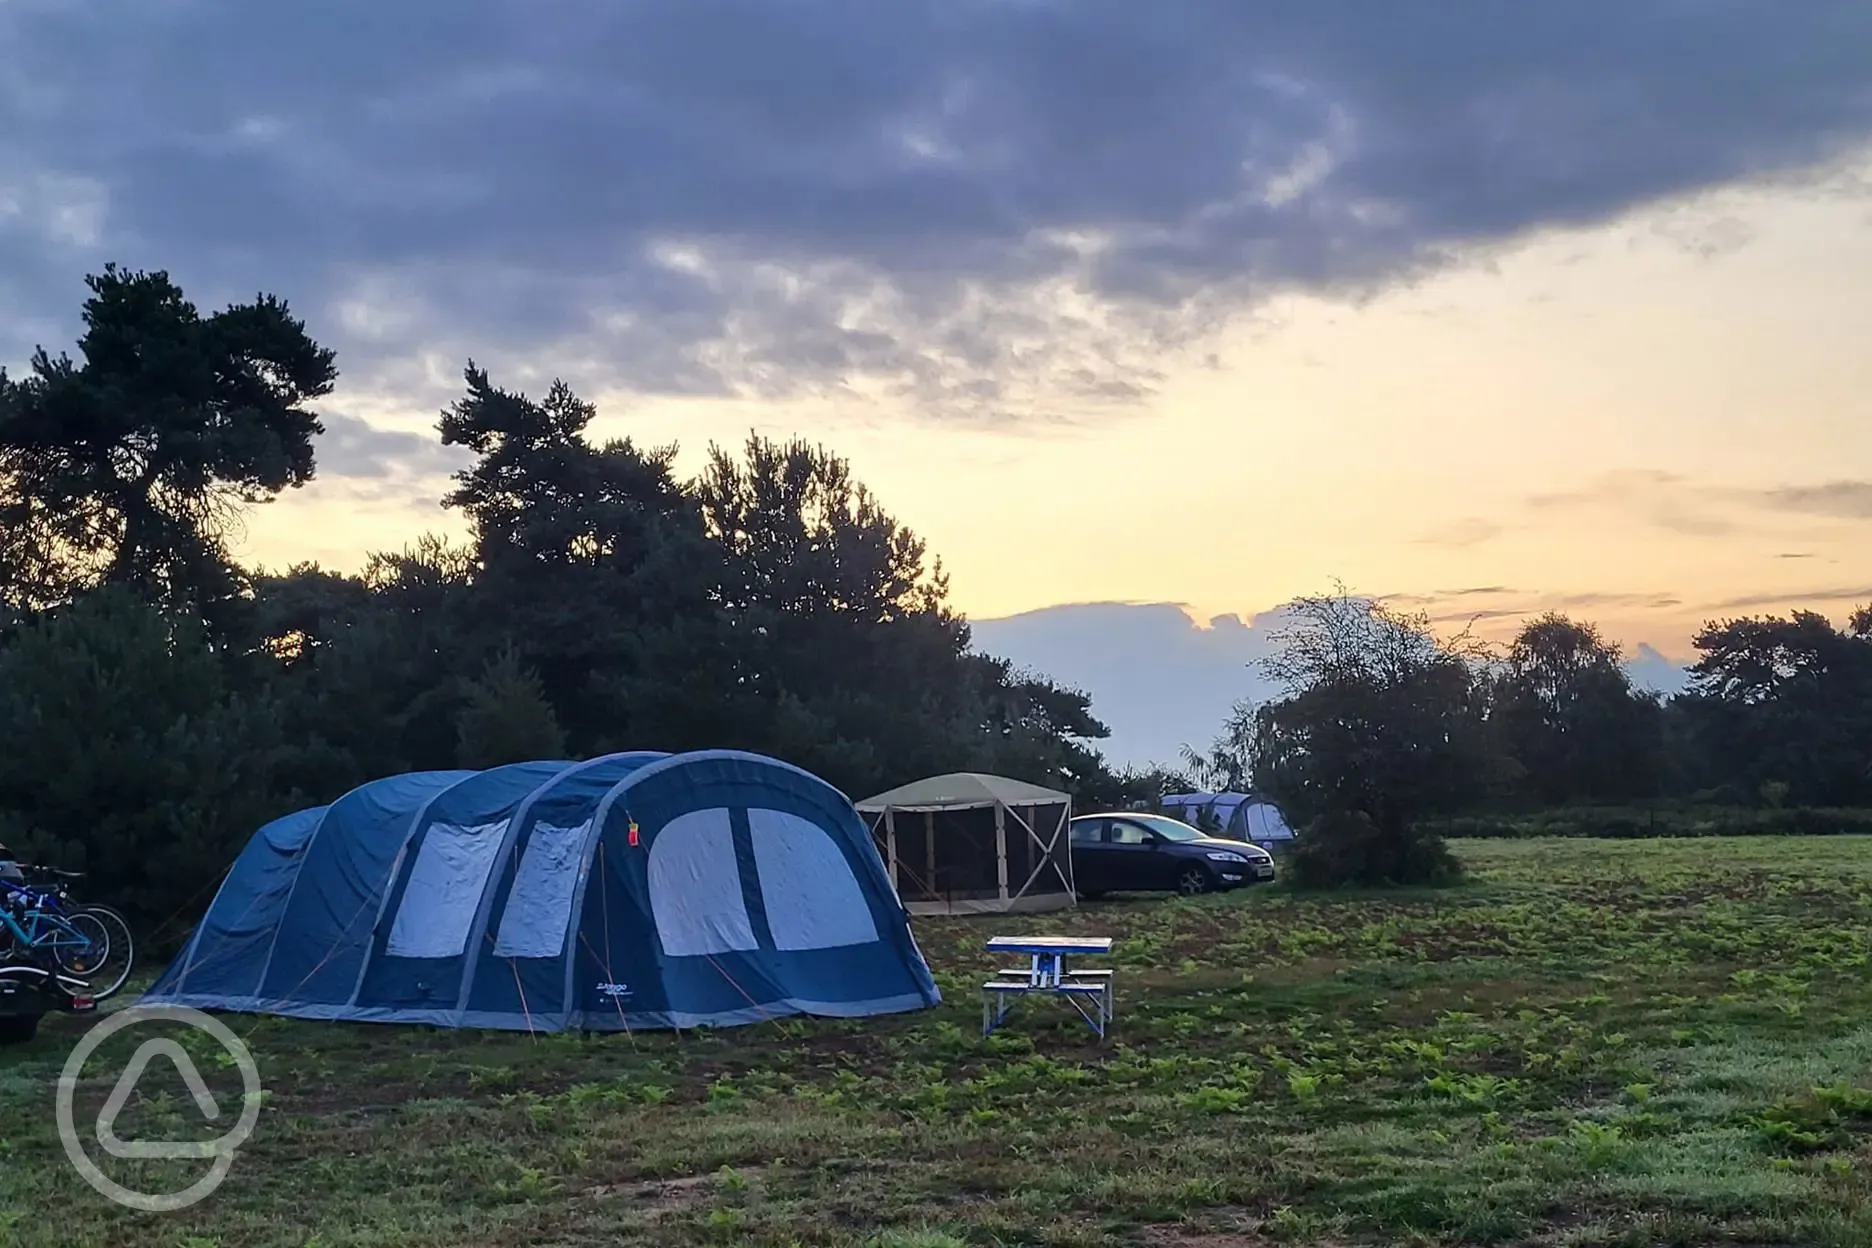 Grass tent pitch at sunset